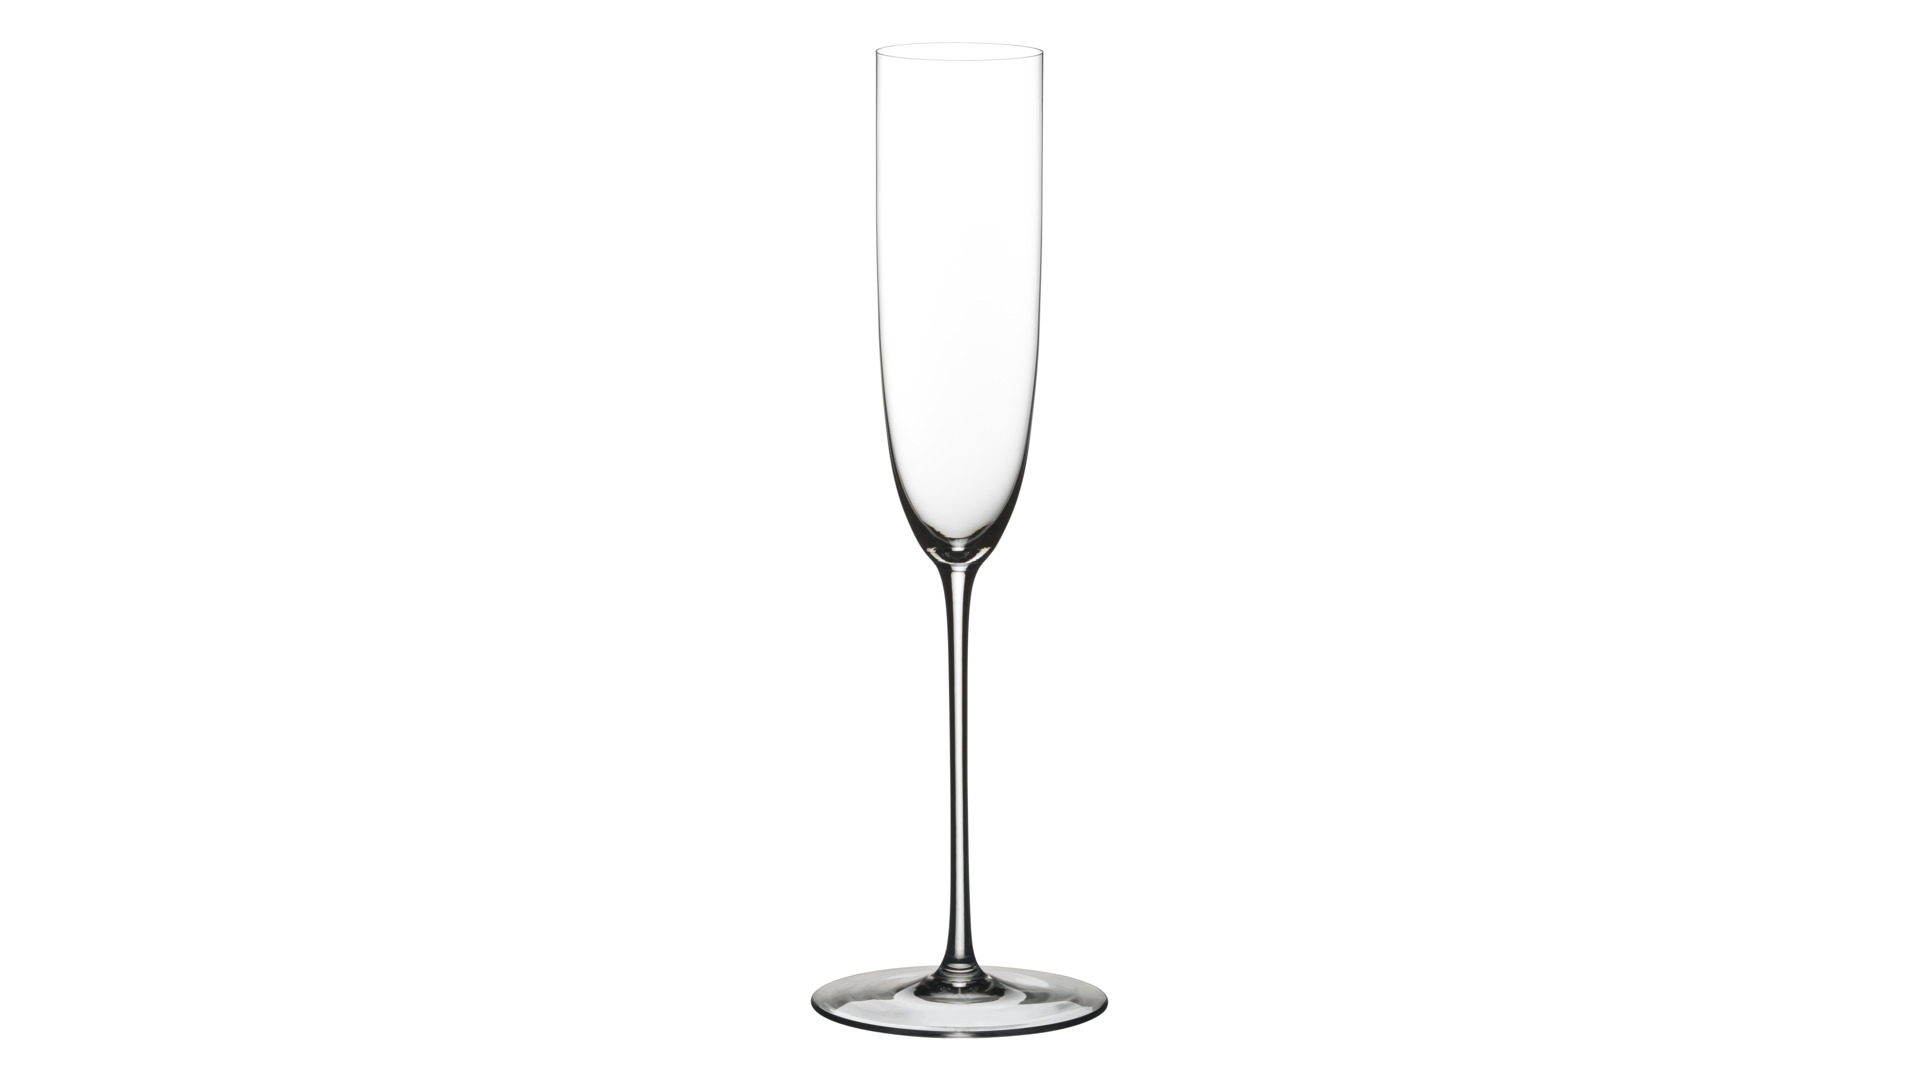 Бокал для шампанского Riedel Superleggero Champagne Flute 186мл, ручная работа, стекло хрустальное